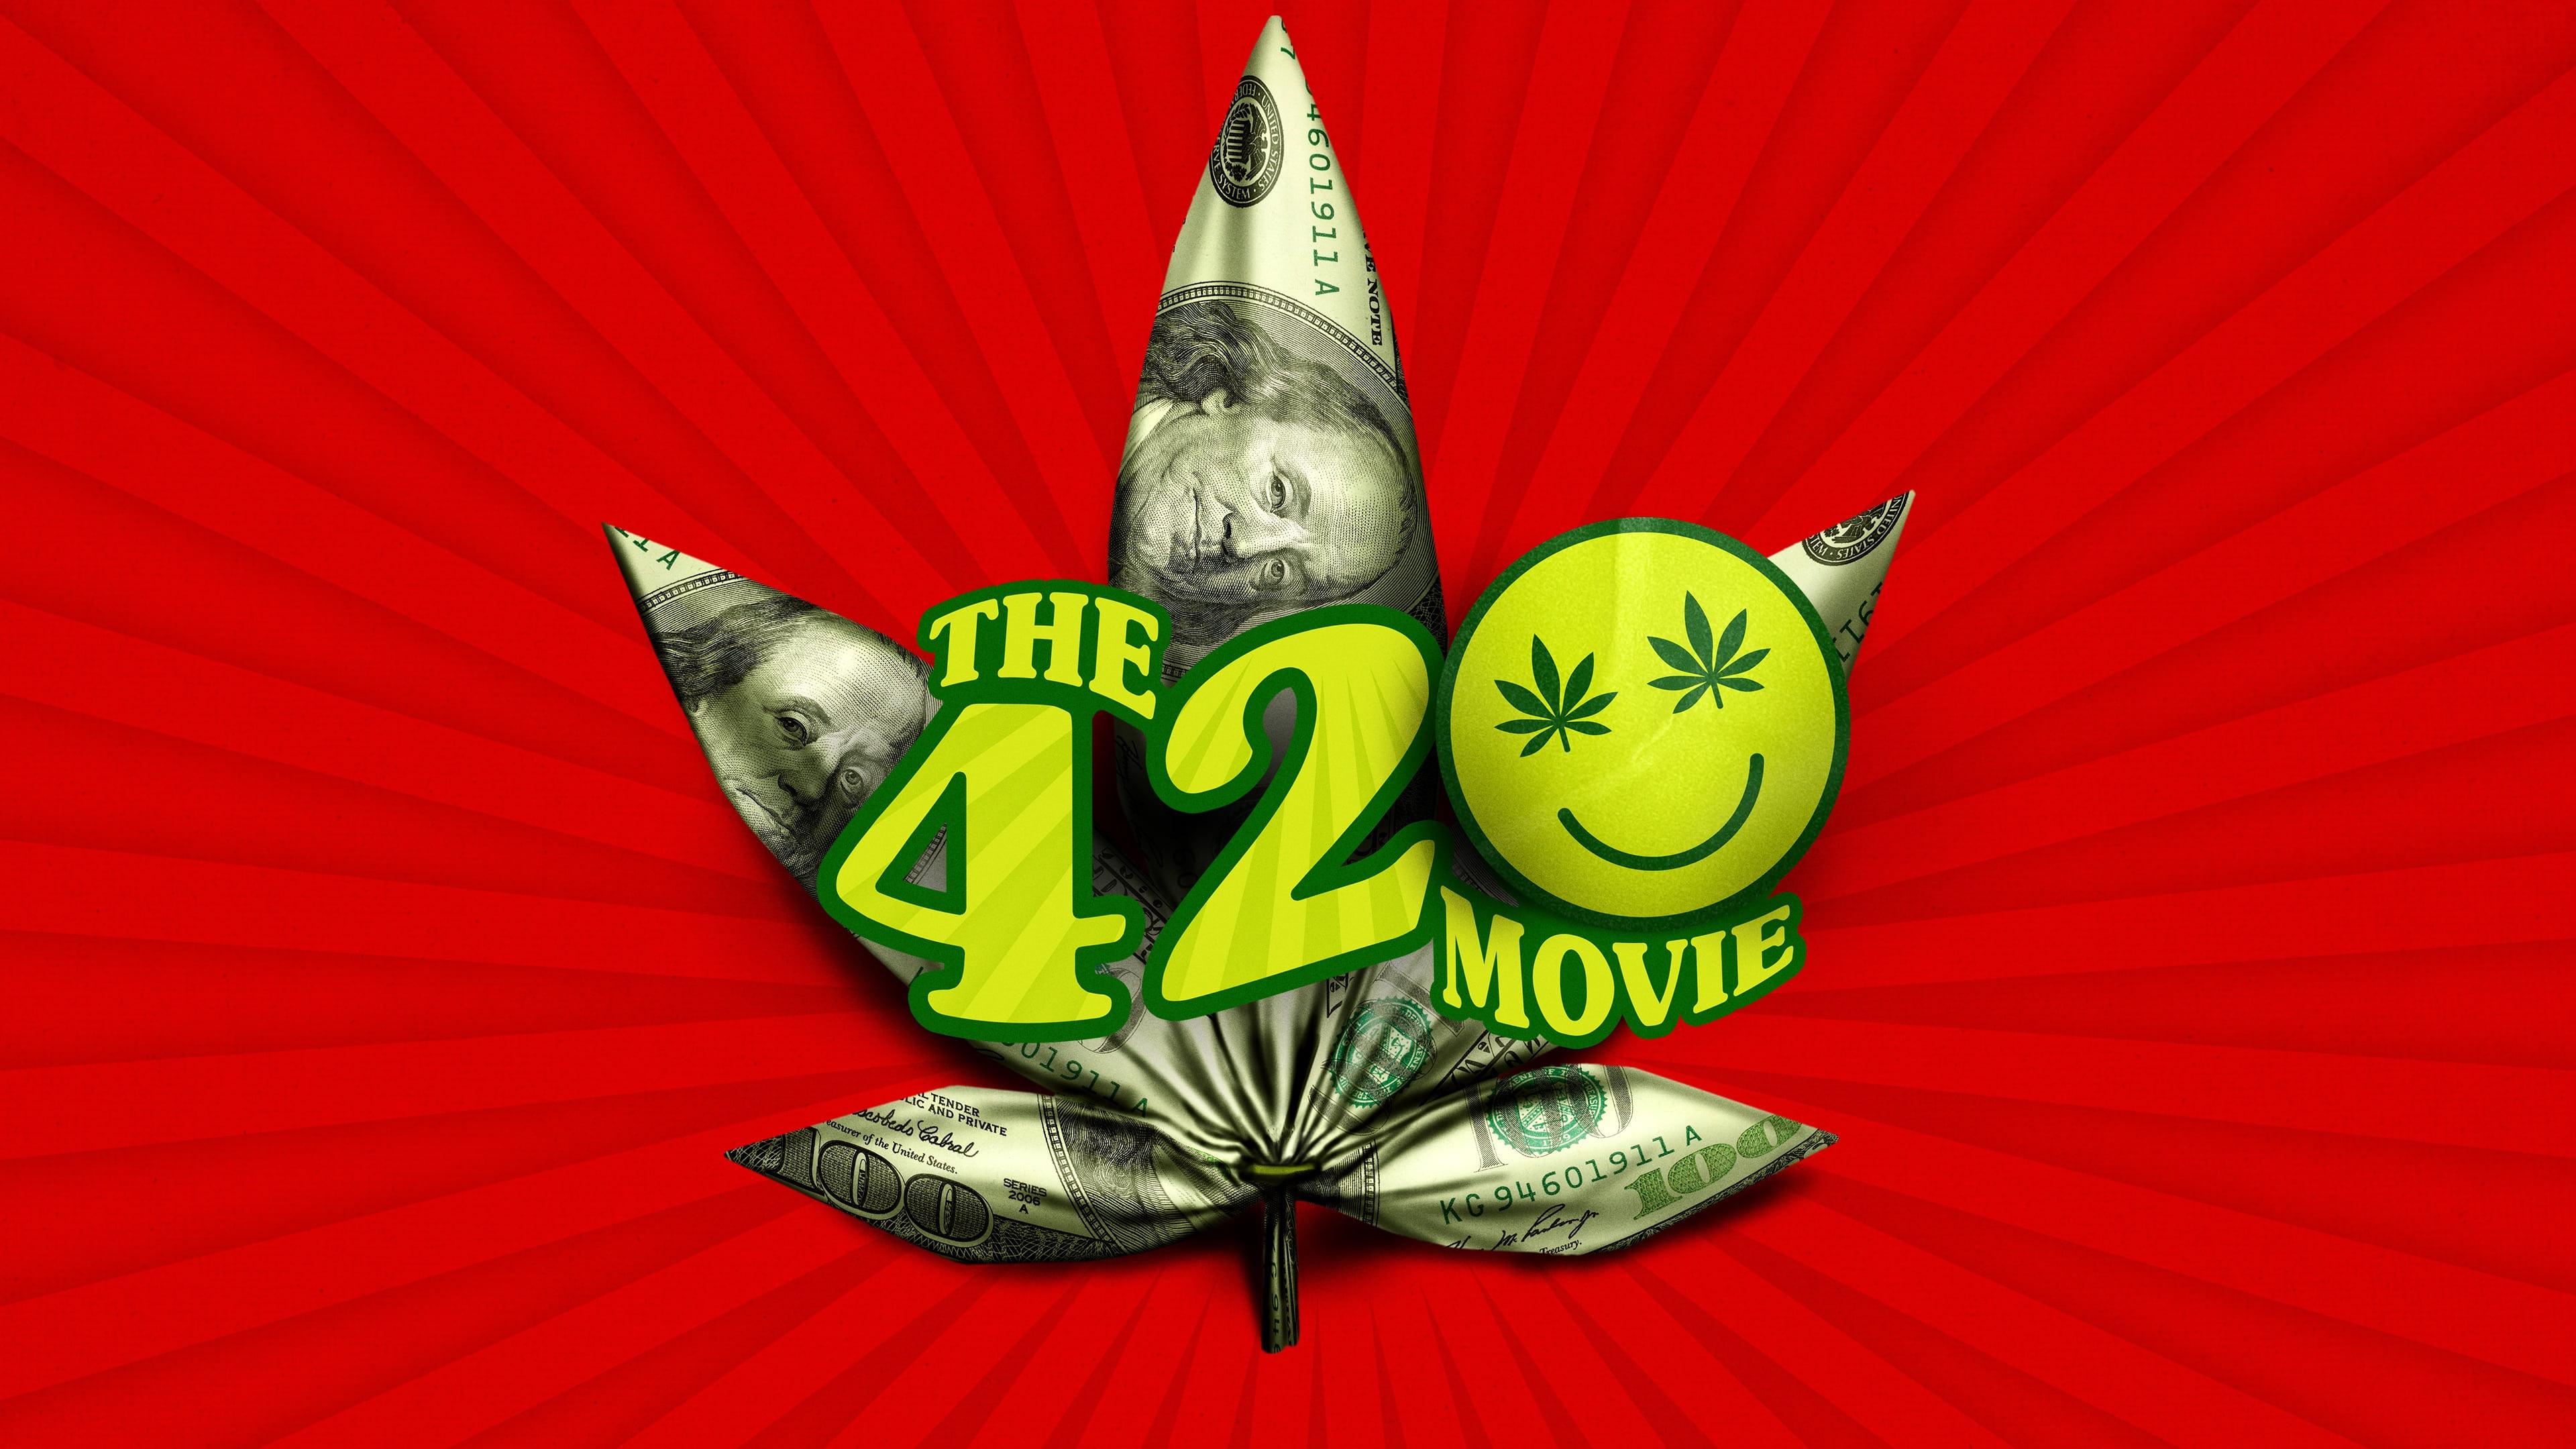 The 420 Movie backdrop